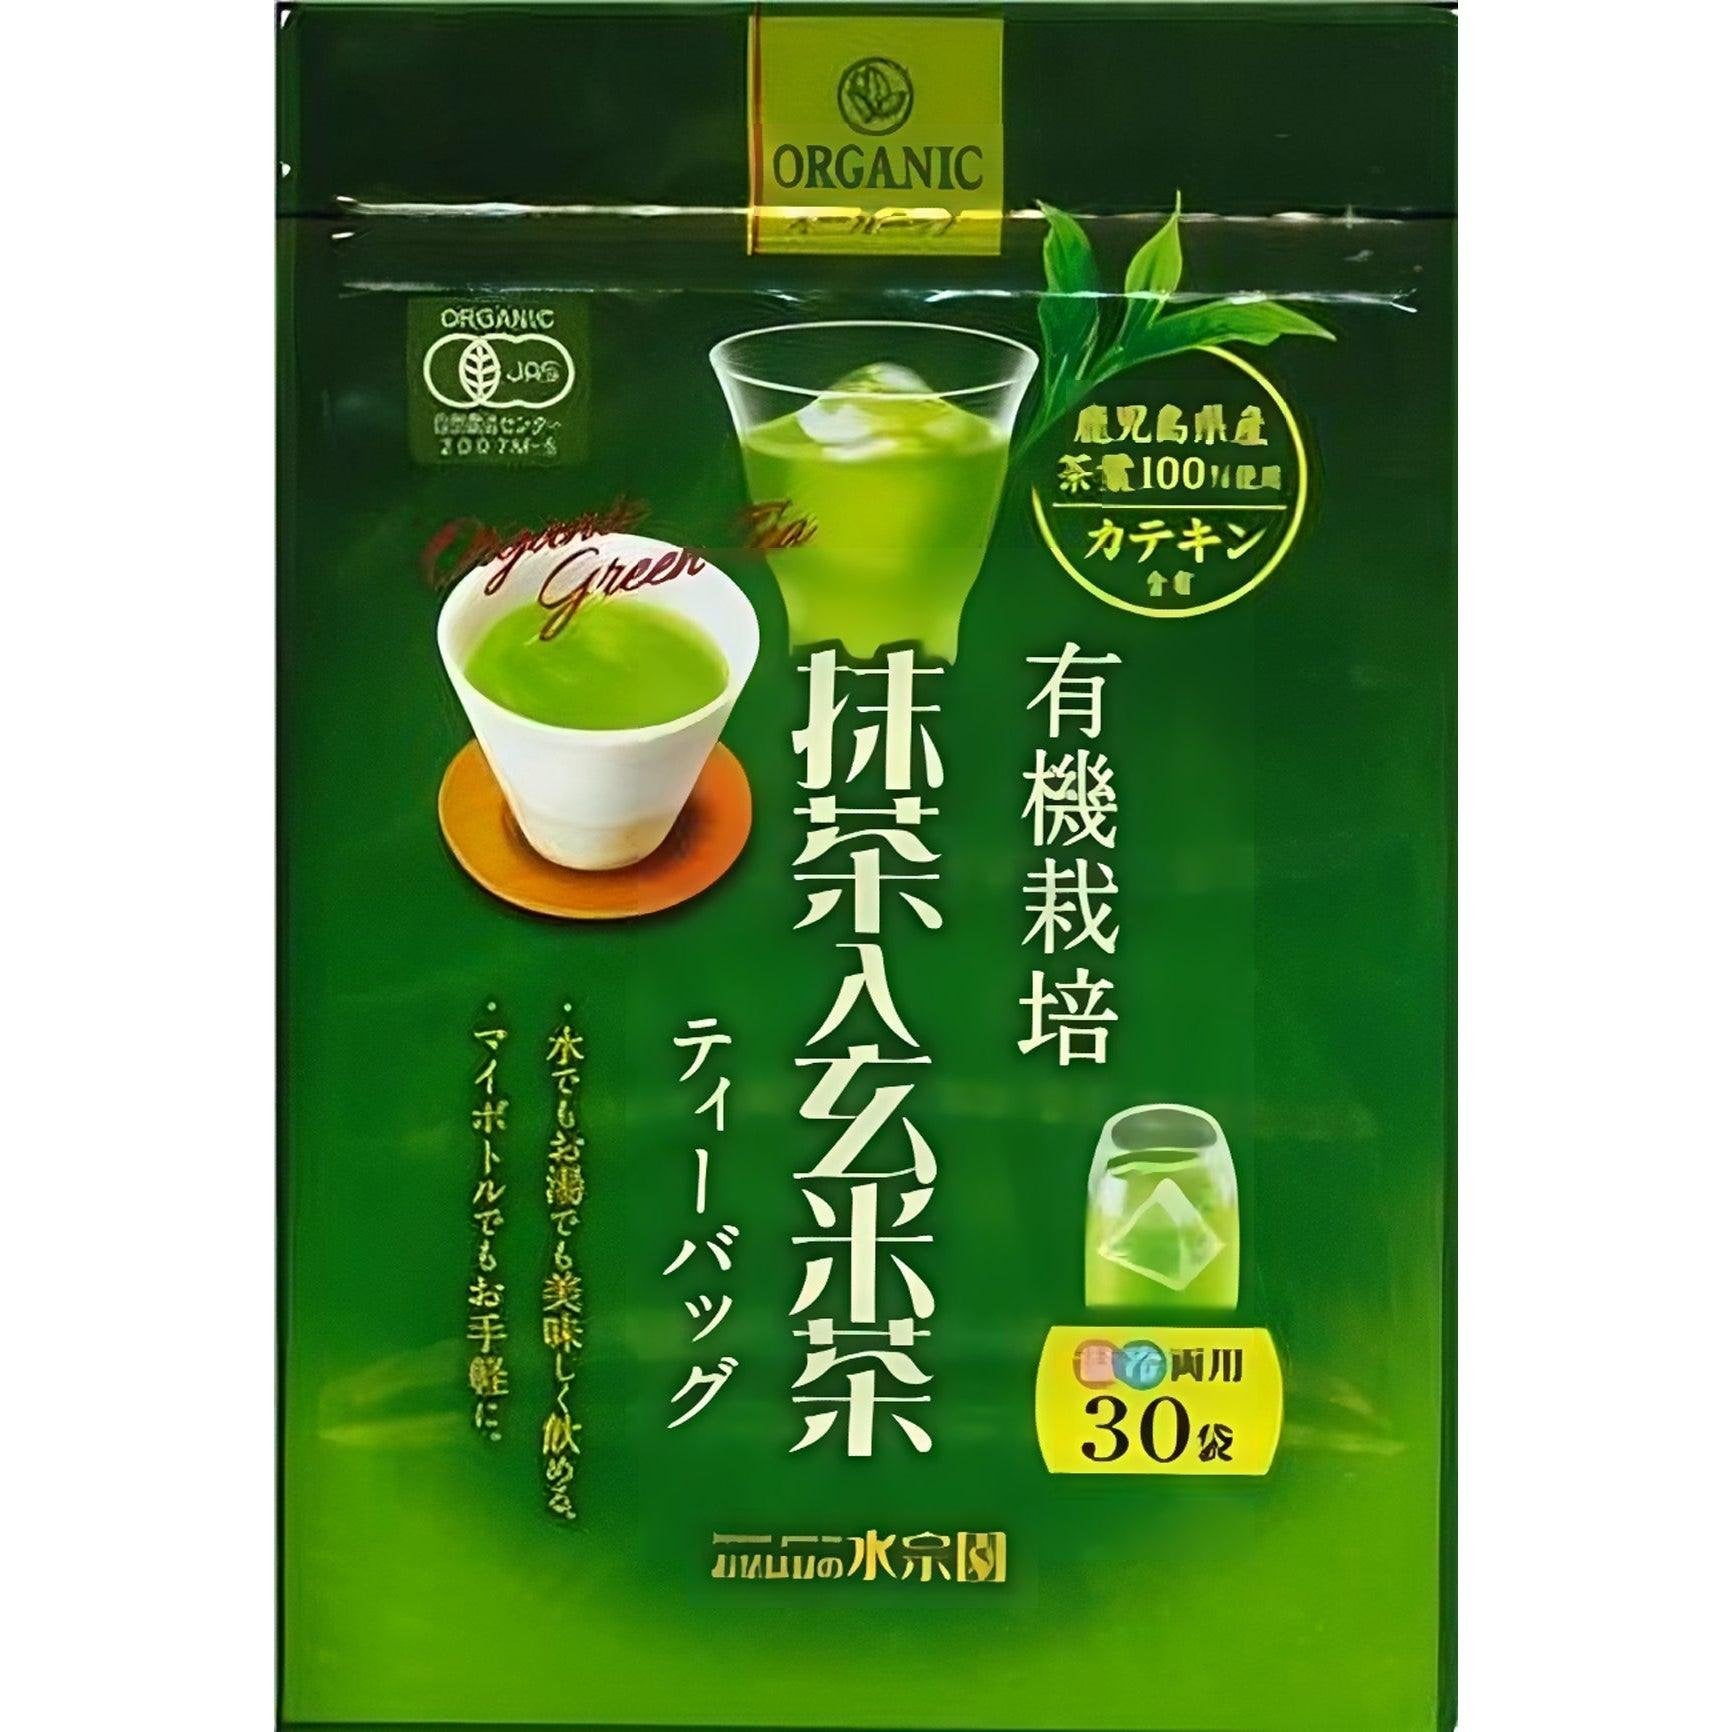 Suisouen Organic Genmaicha Brown Rice Tea With Matcha Green Tea Bags 30ct.